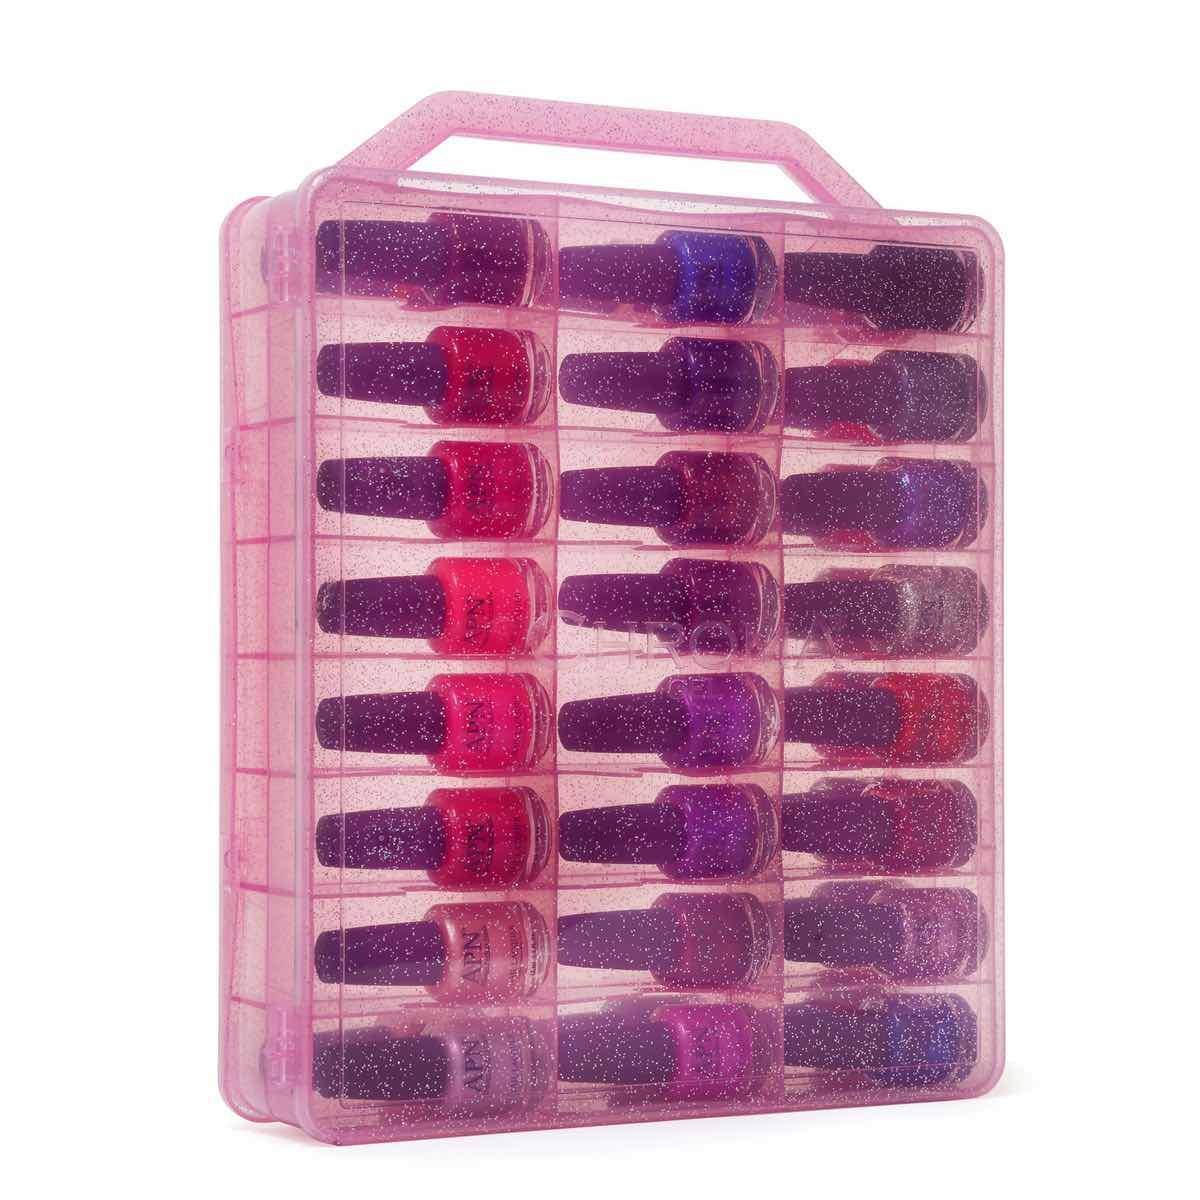 Chroma Gel Nail Polish Case Holder - Pink Glitter, 48 Polishes Capacity, Lightweight & Durable - beautyhair.co.ukChroma Gel